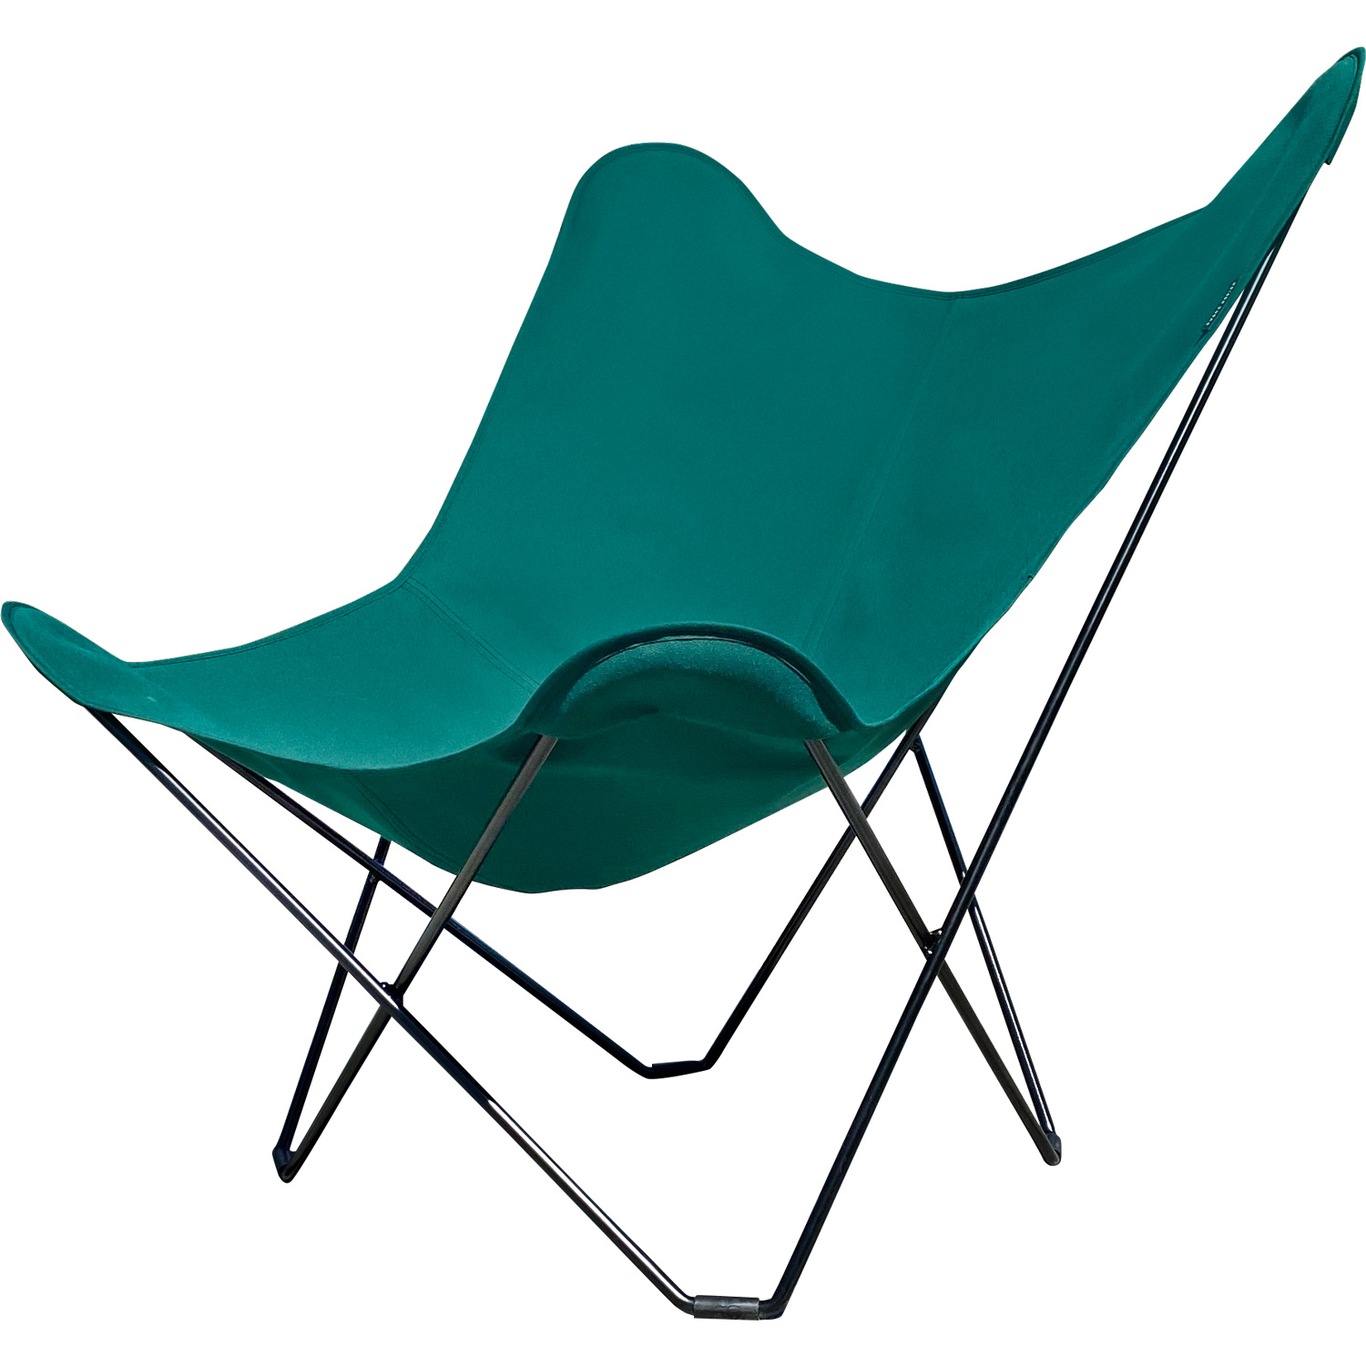 Sunshine Mariposa Lounge Chair, Forest Green / Black Steel